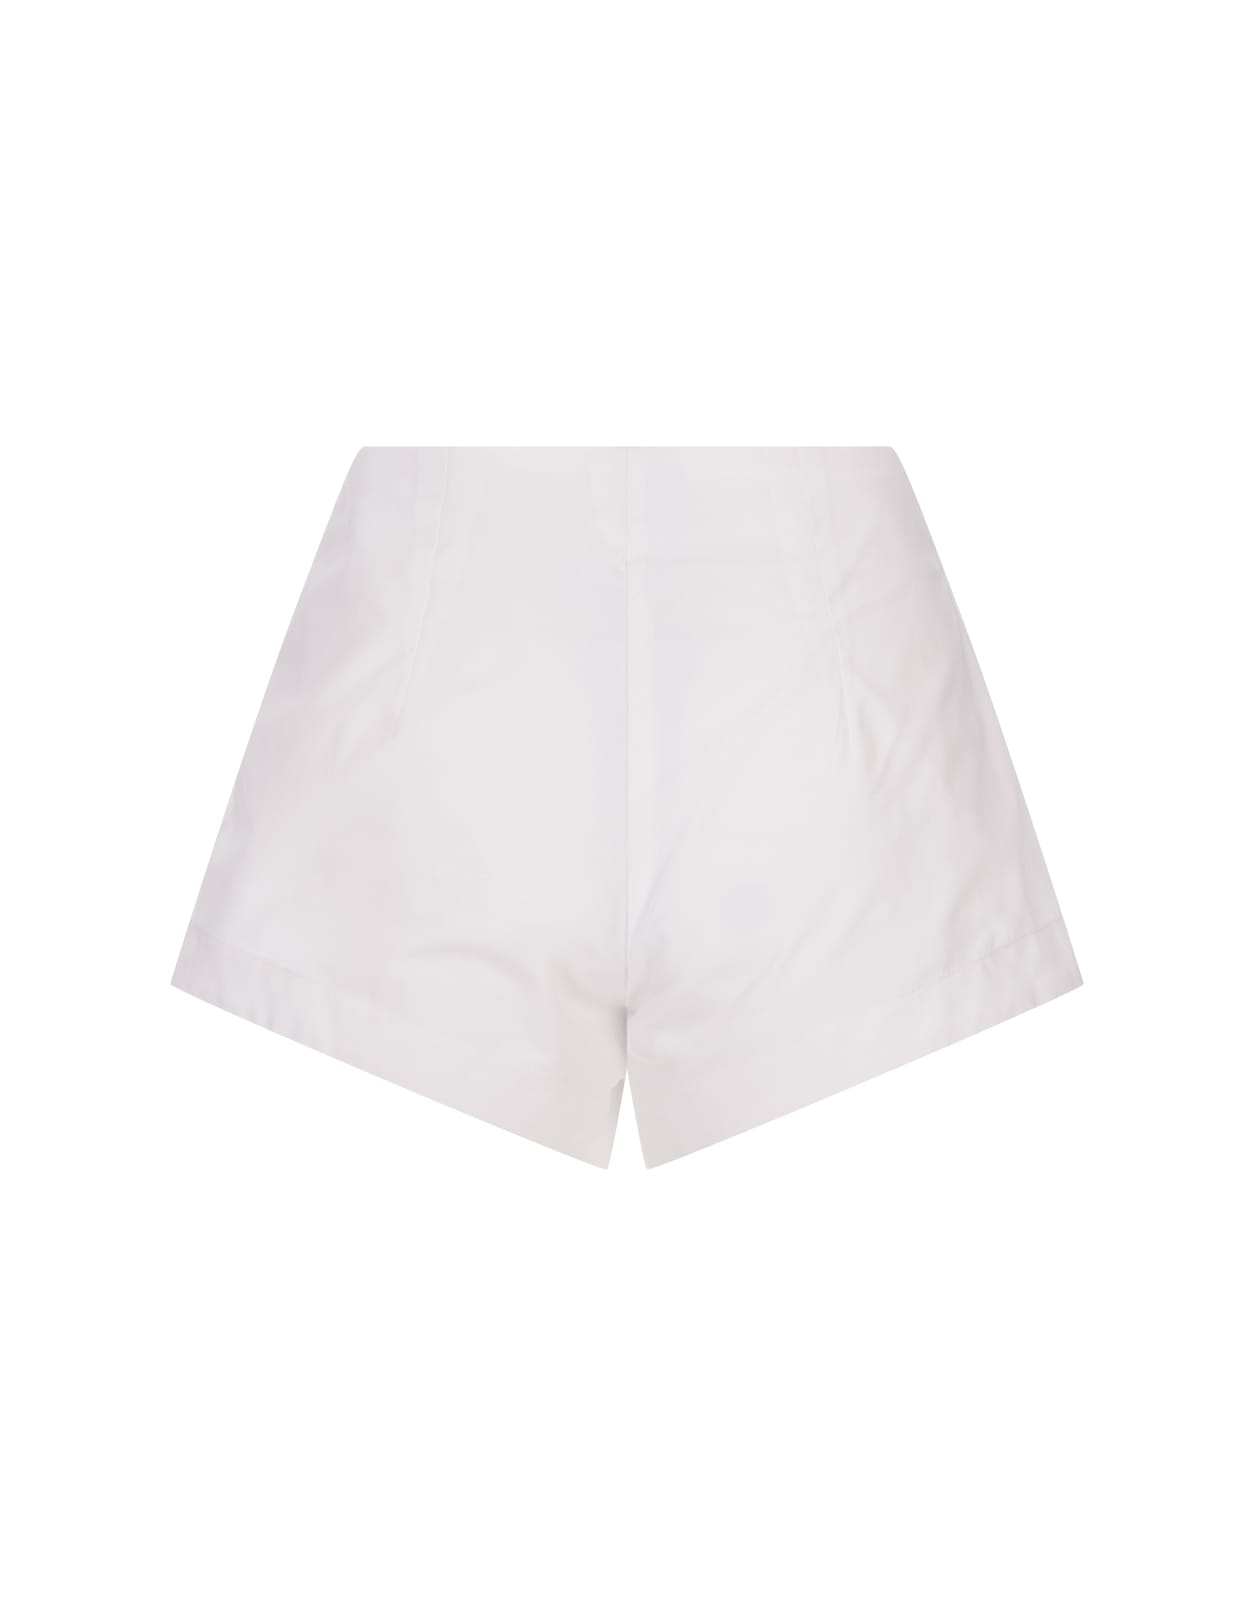 Shop Amotea White Cotton Donna Shorts